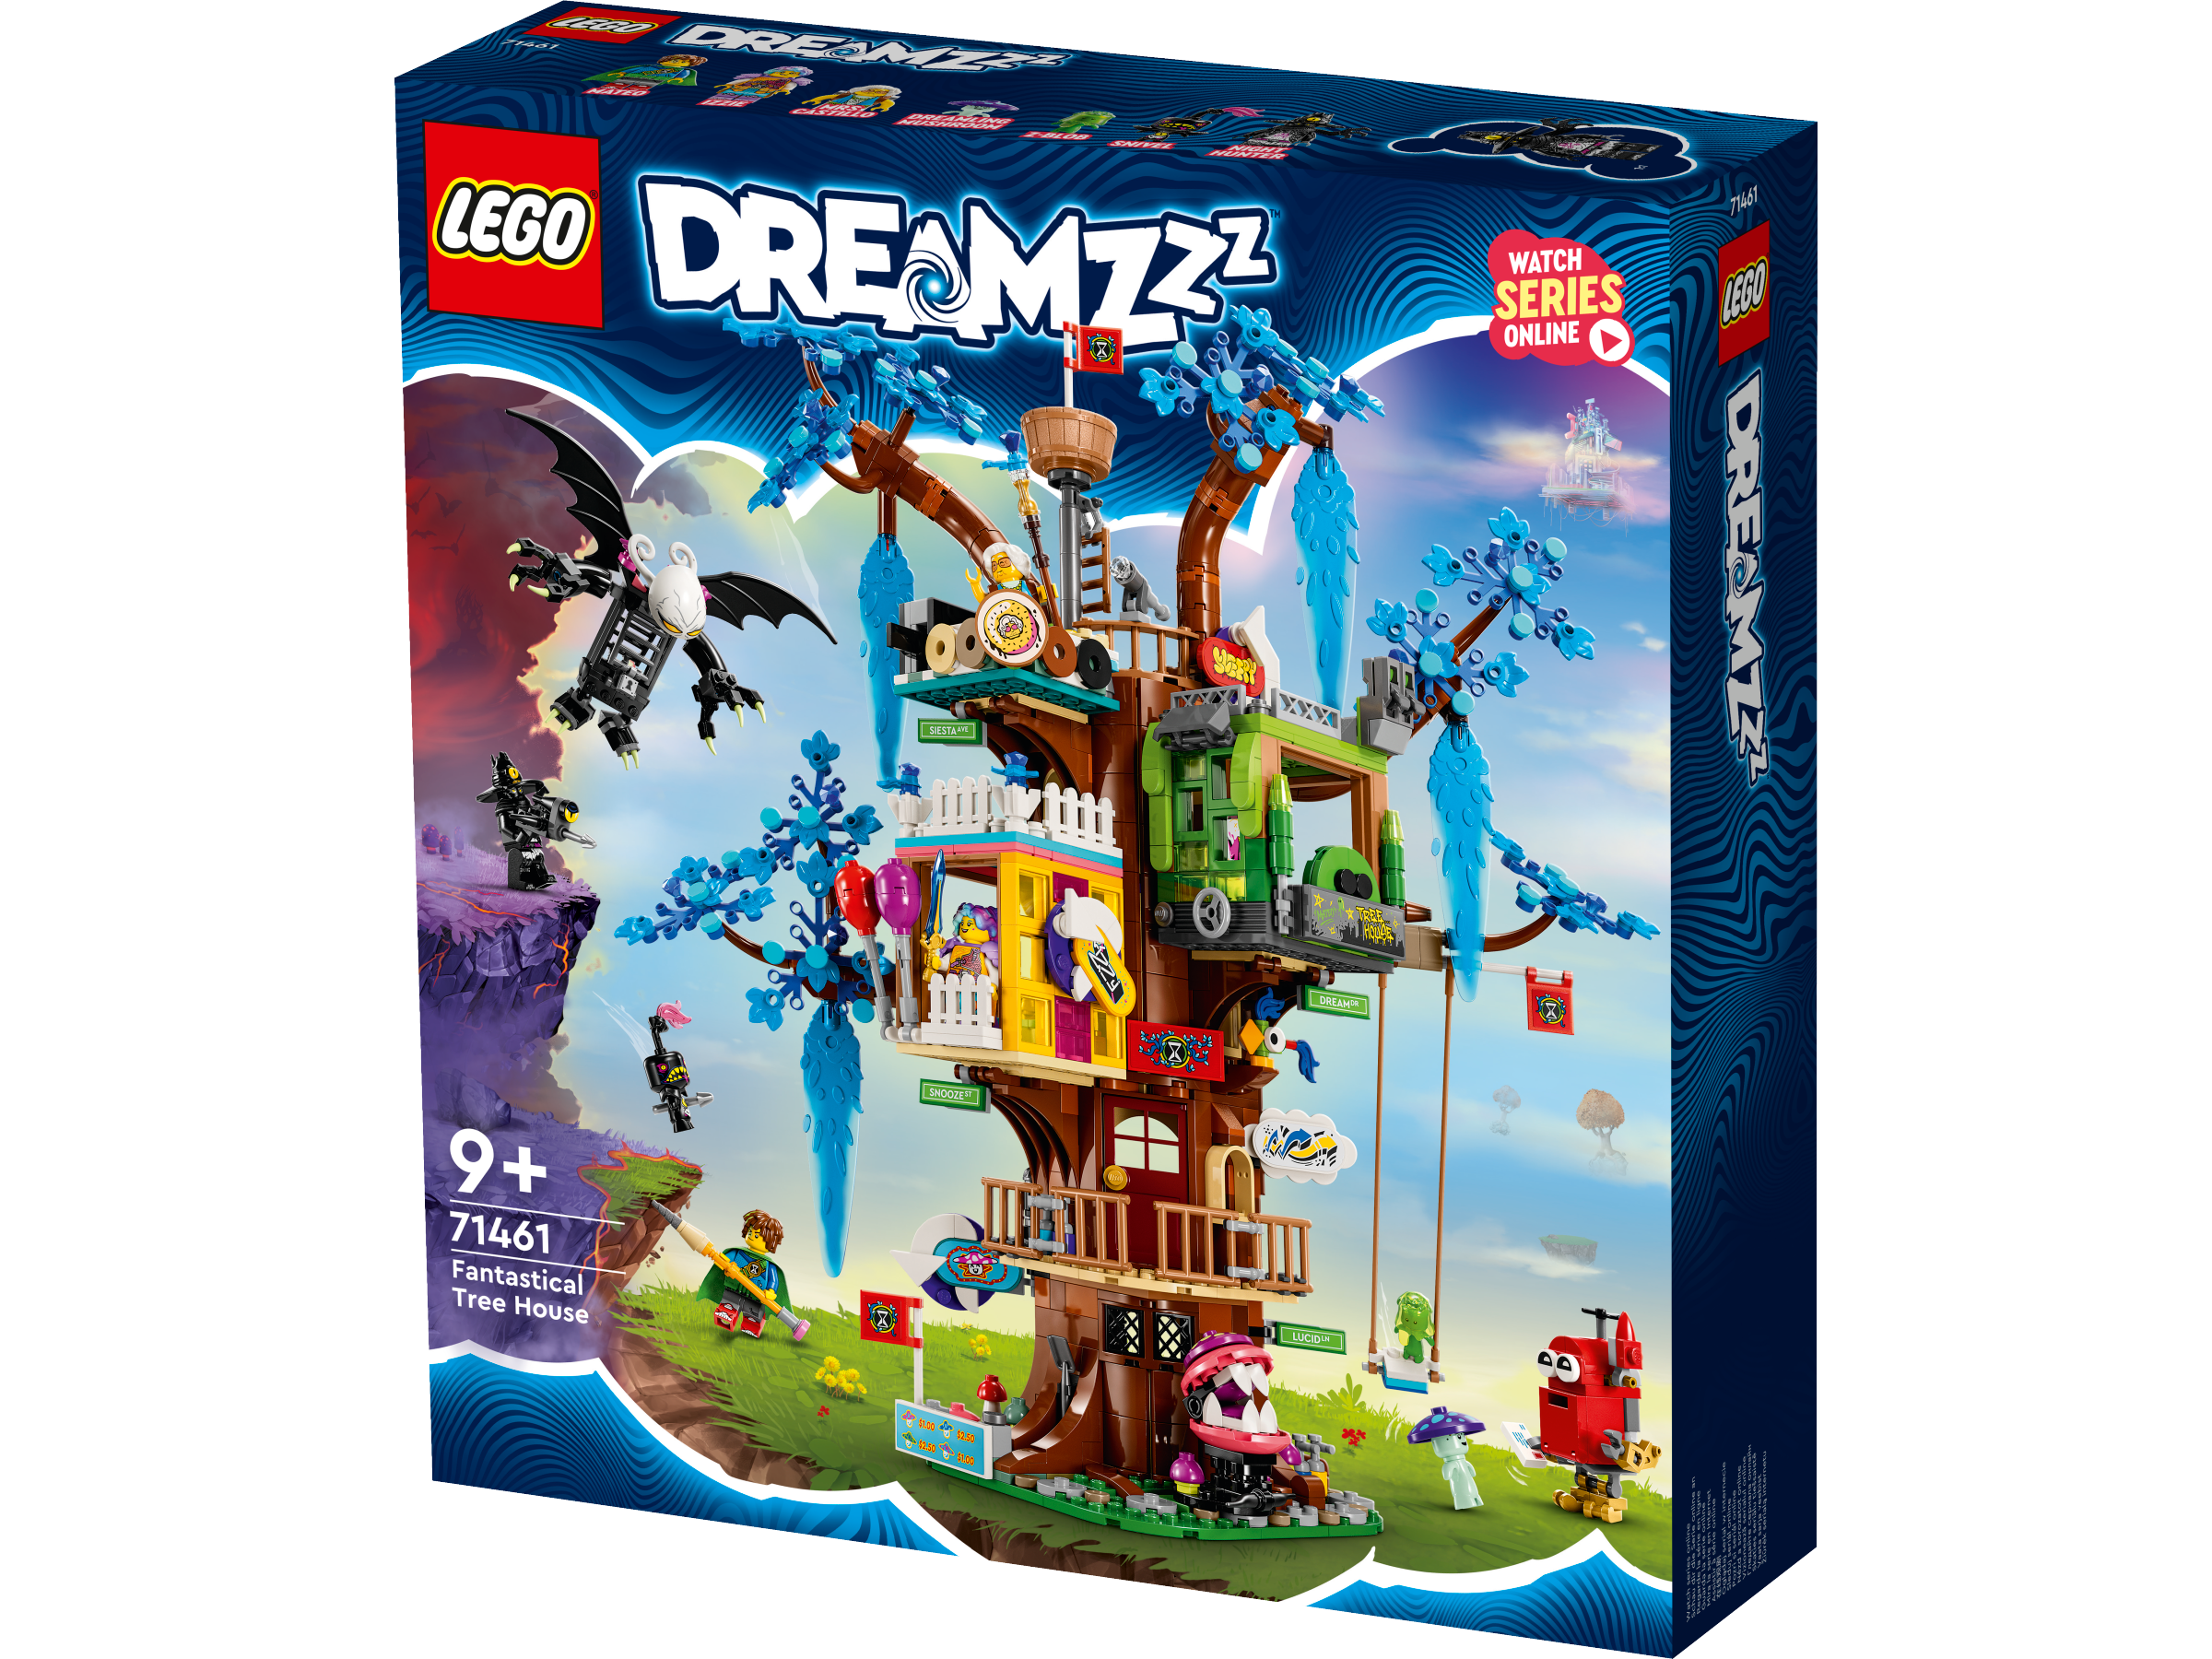 Lego 71461 Fantastical Tree House